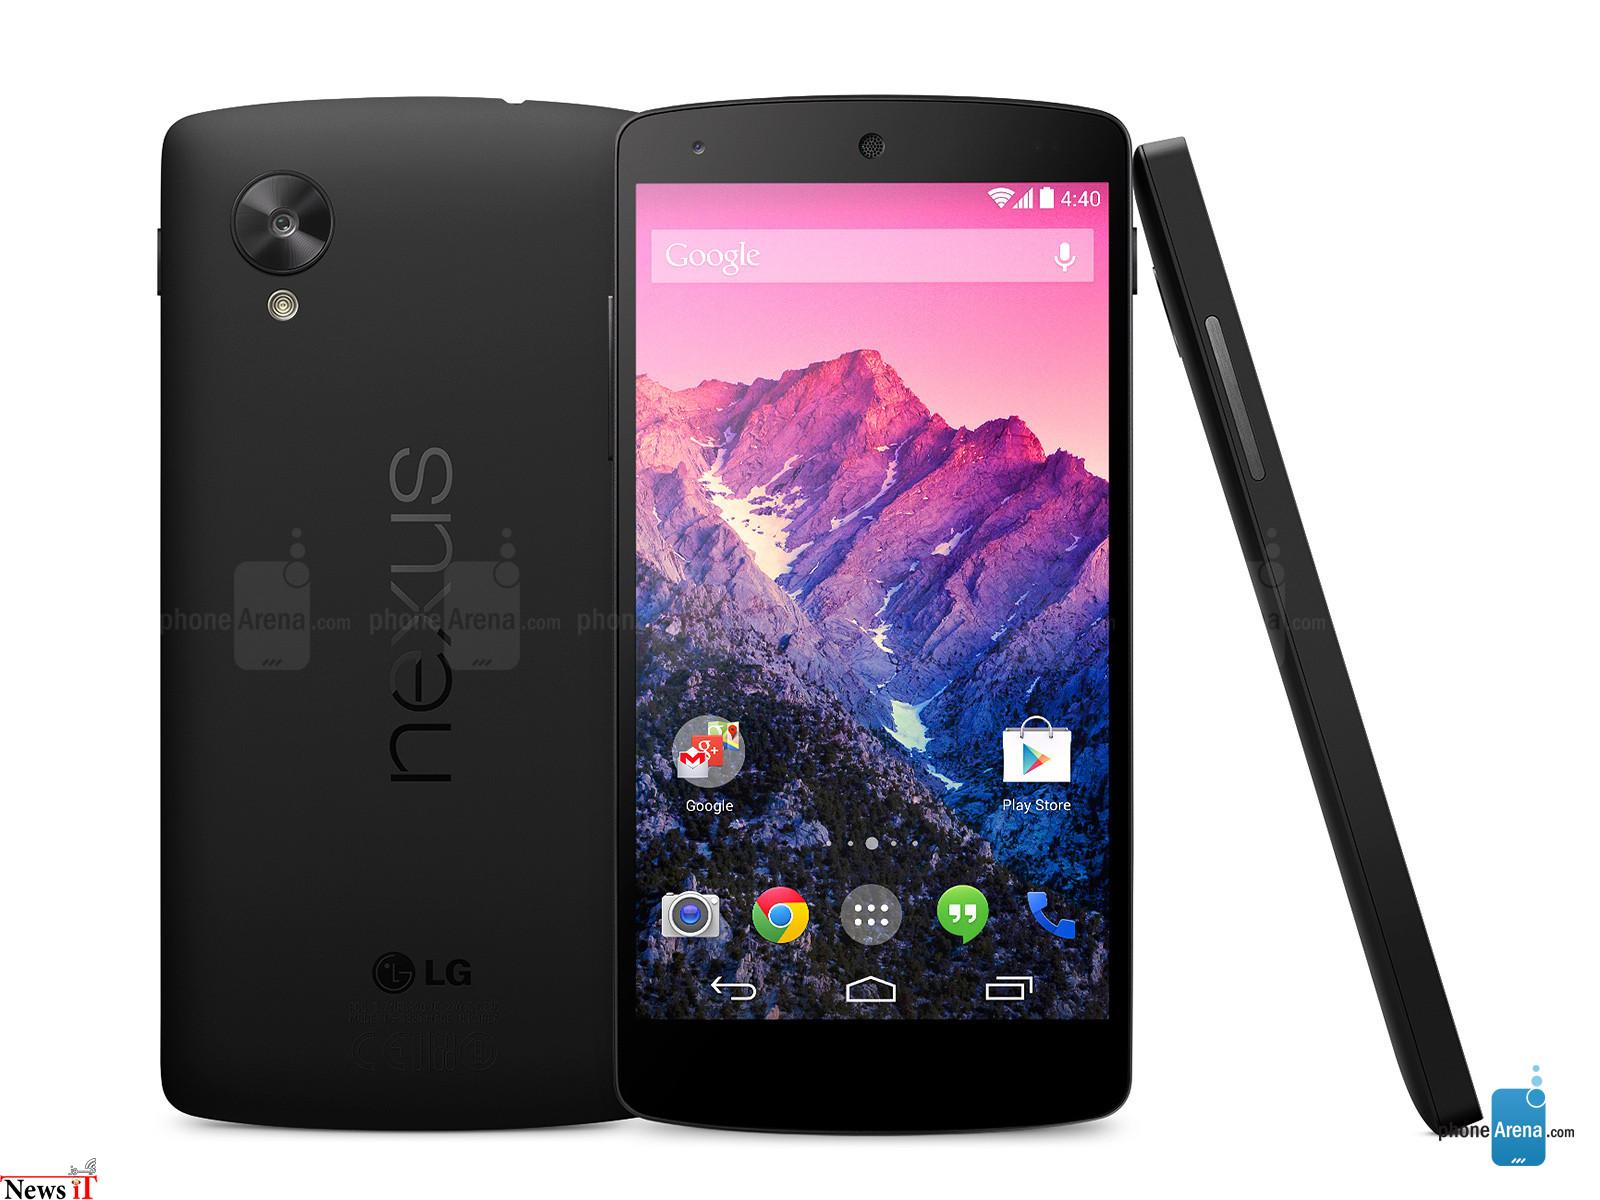 LG-Nexus-5-ad1